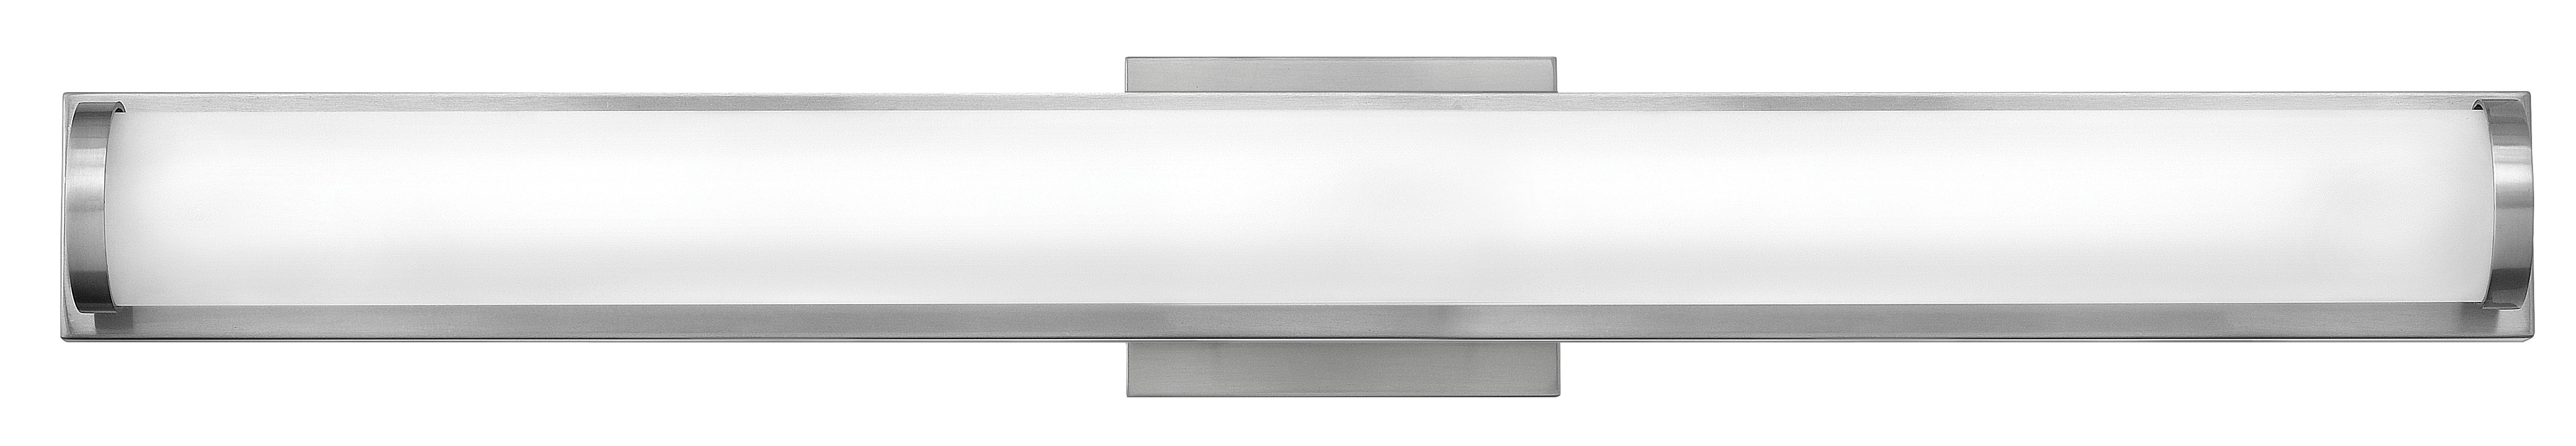 ACCLAIM Bathroom sconce Nickel INTEGRATED LED - 53844BN | HINKLEY